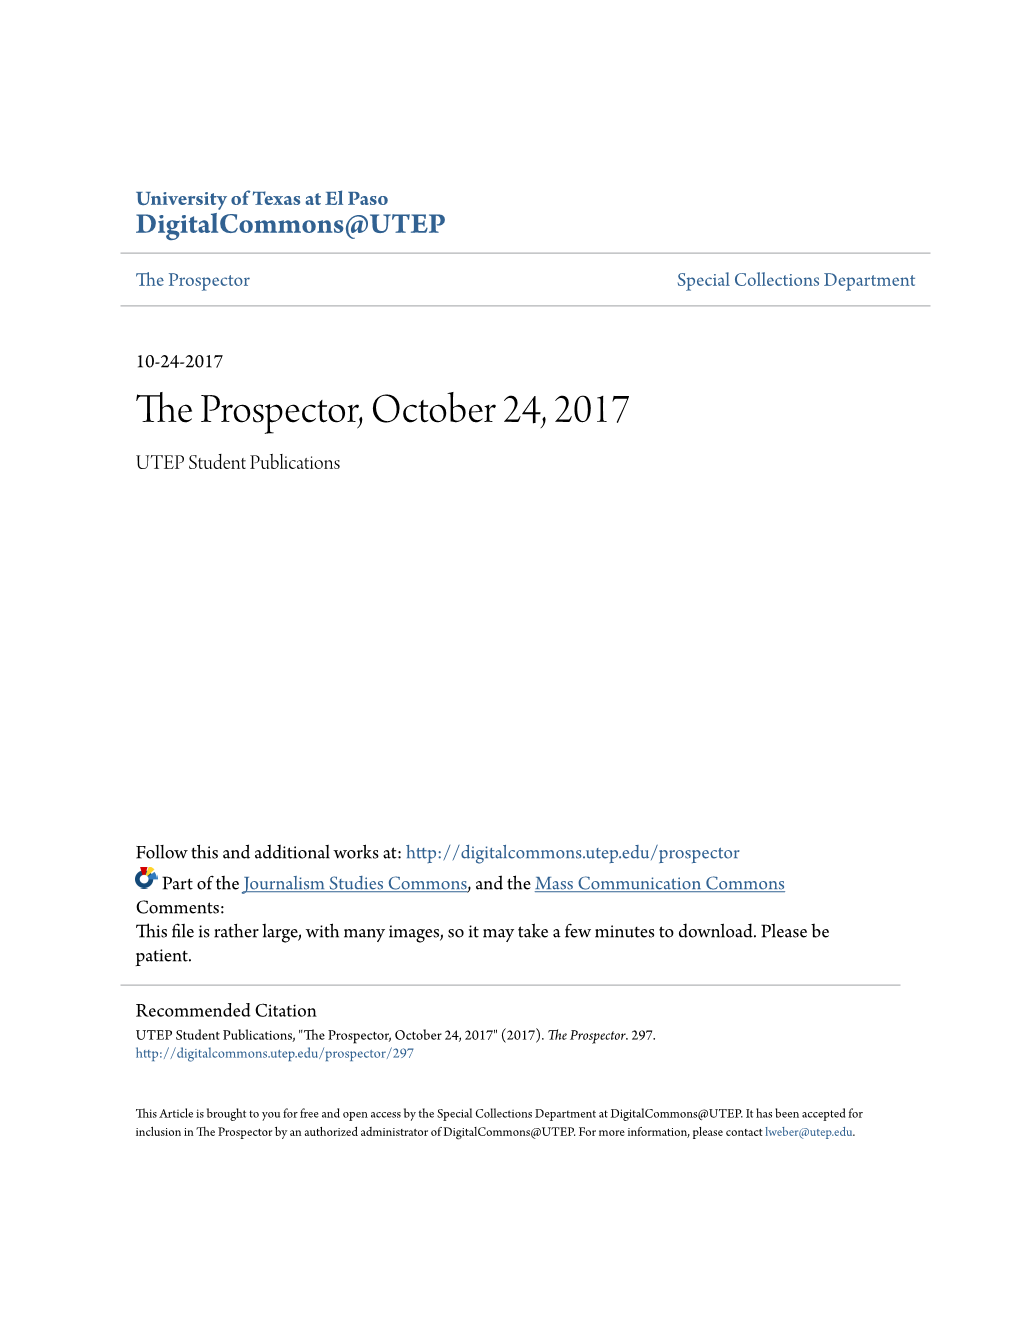 The Prospector, October 24, 2017